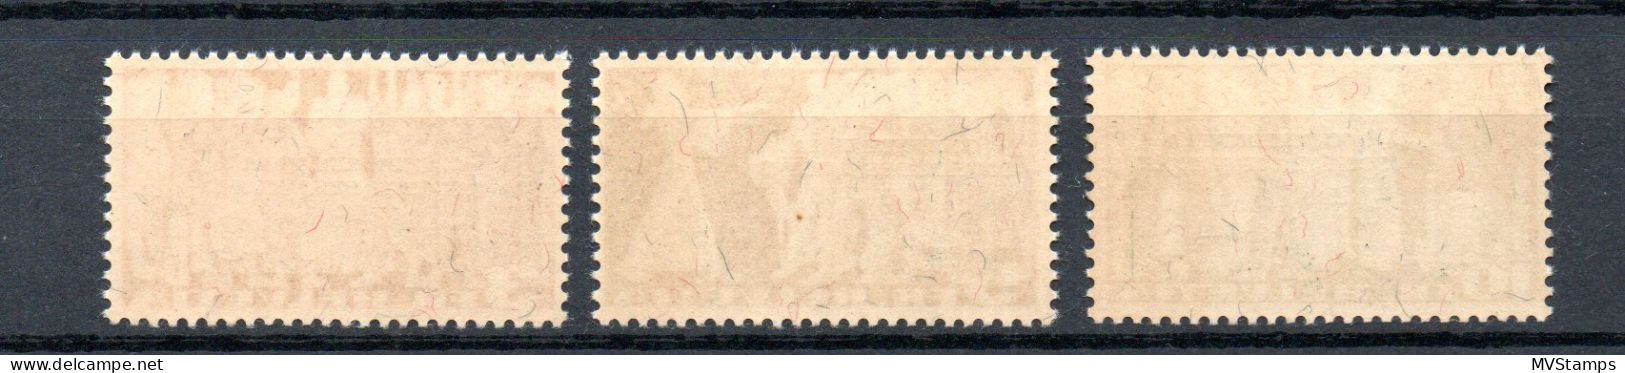 Switzerland 1939 Set Overprinted Service BIT/ILO Stamps (Michel 57/59) Used - Oficial